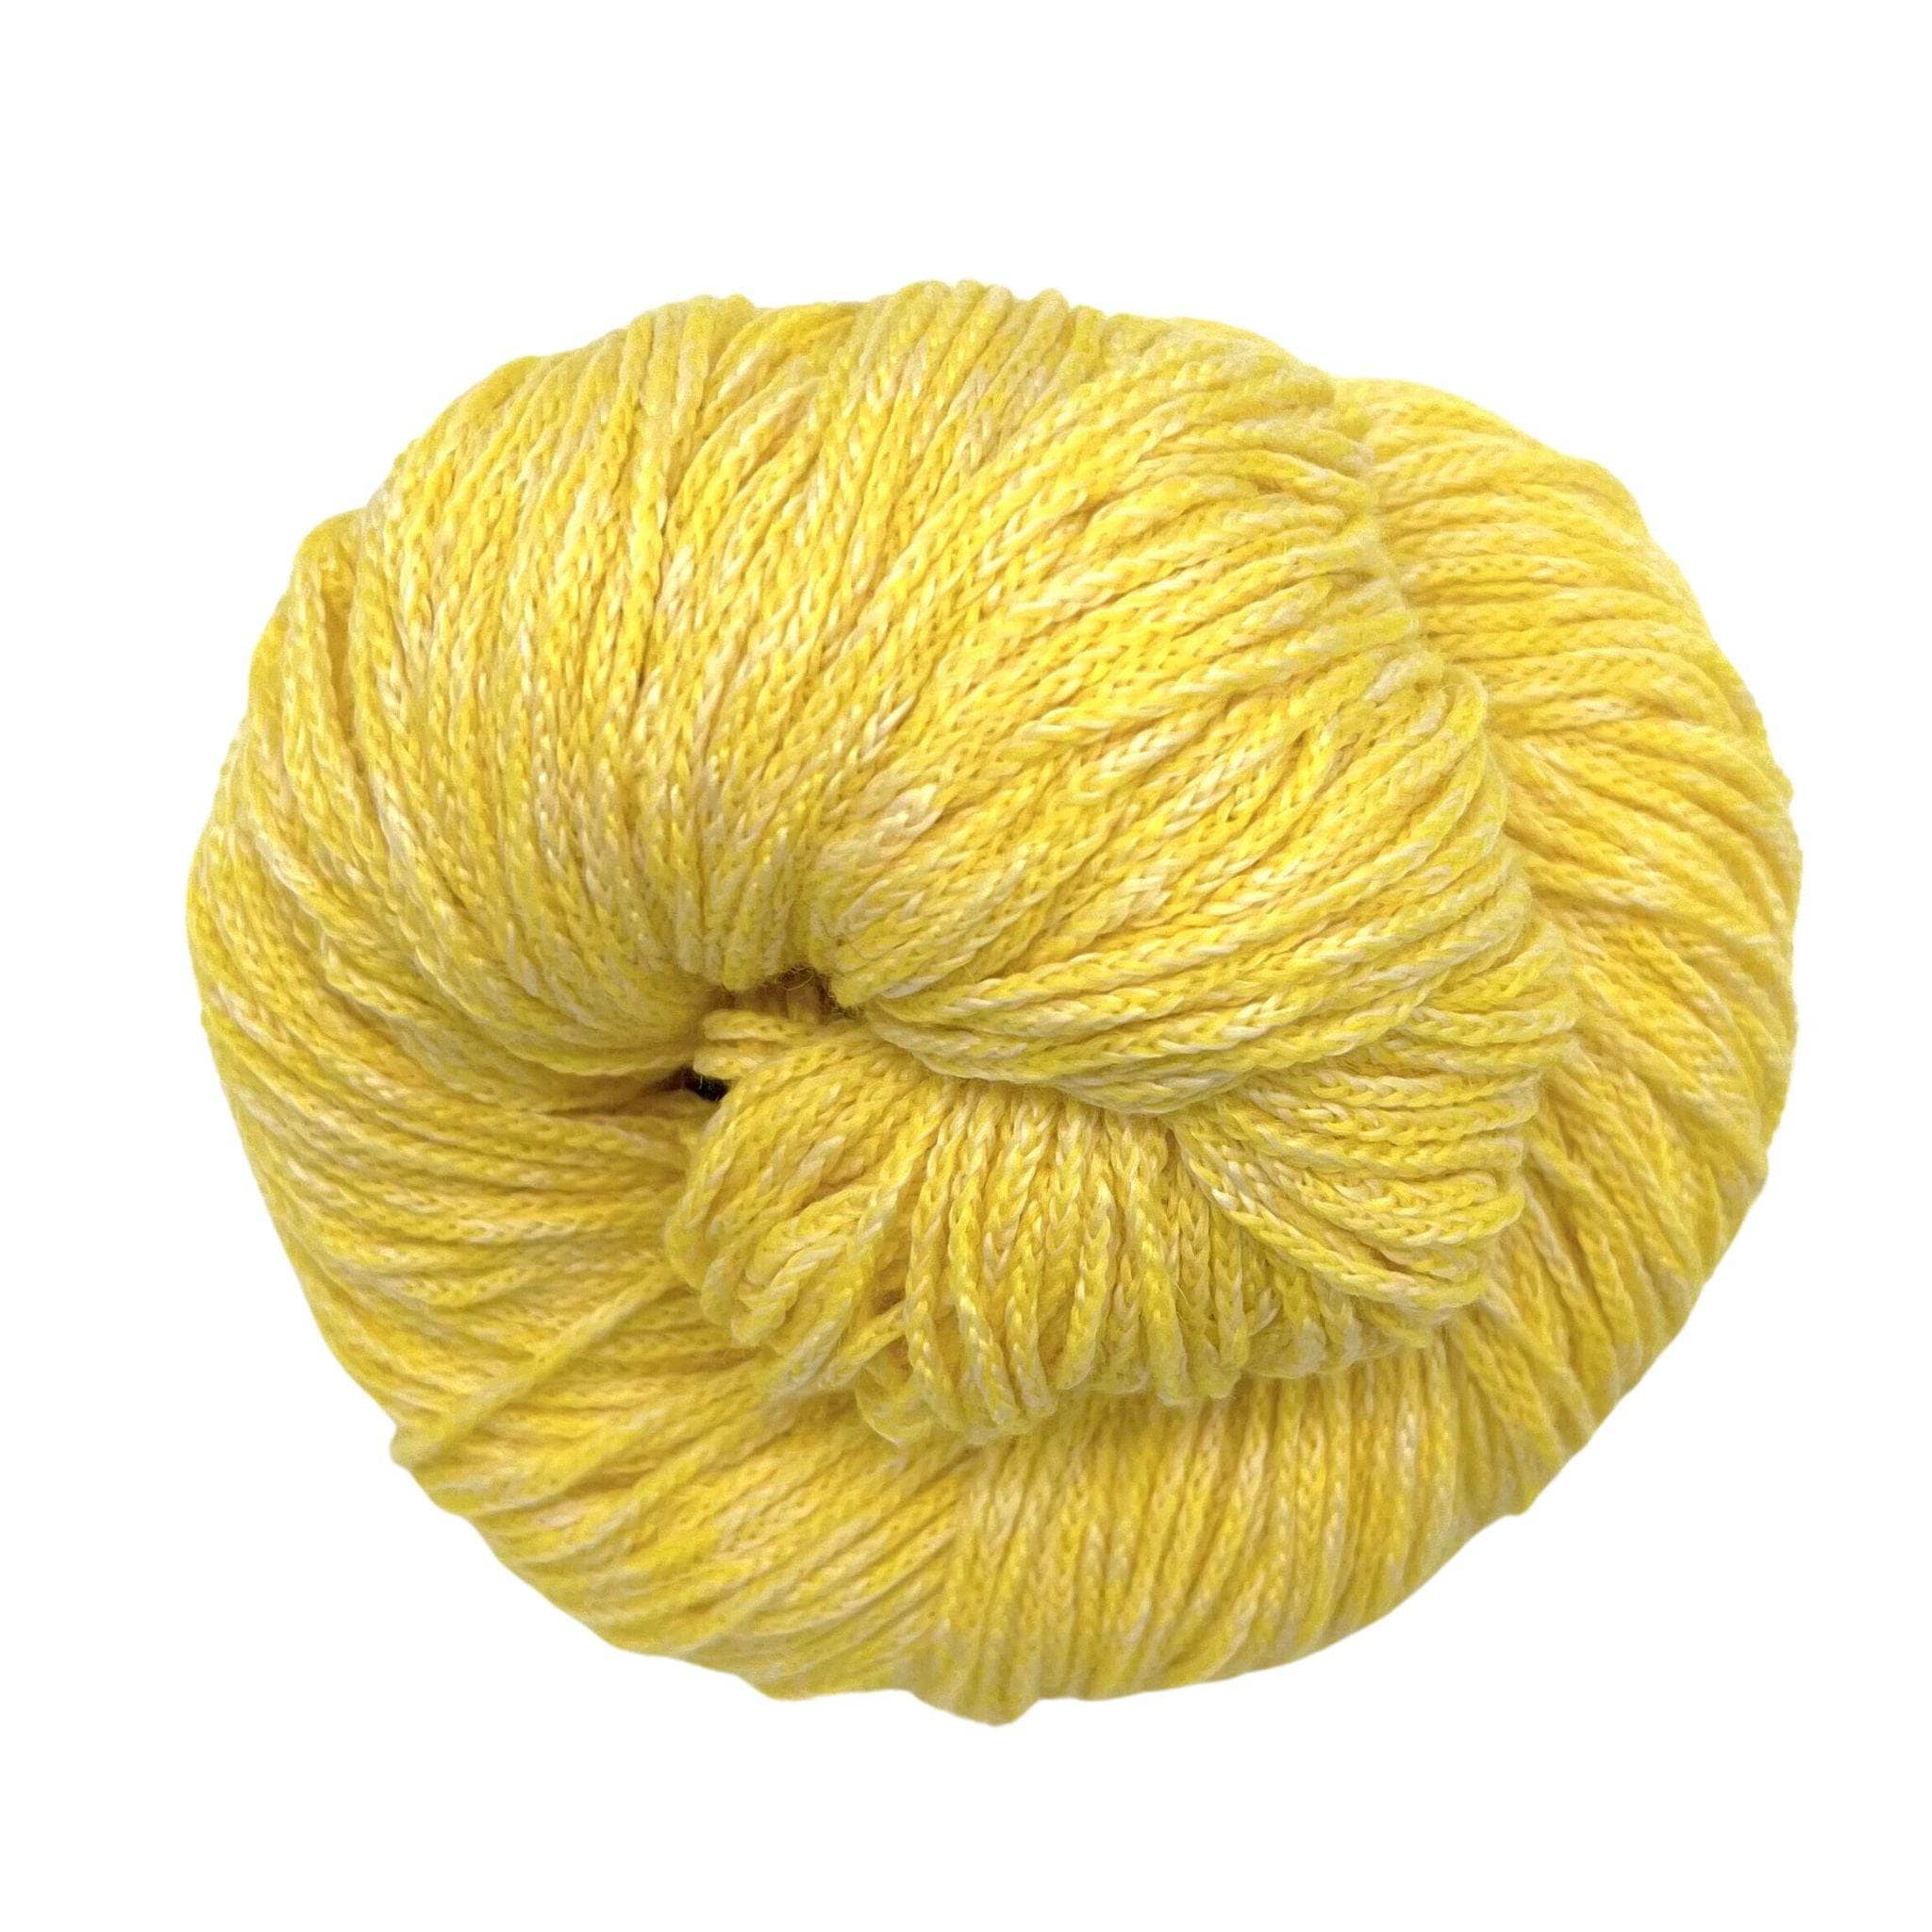 Dk Weight Merino, Alpaca, Cotton Blend Yarn - Daffodil